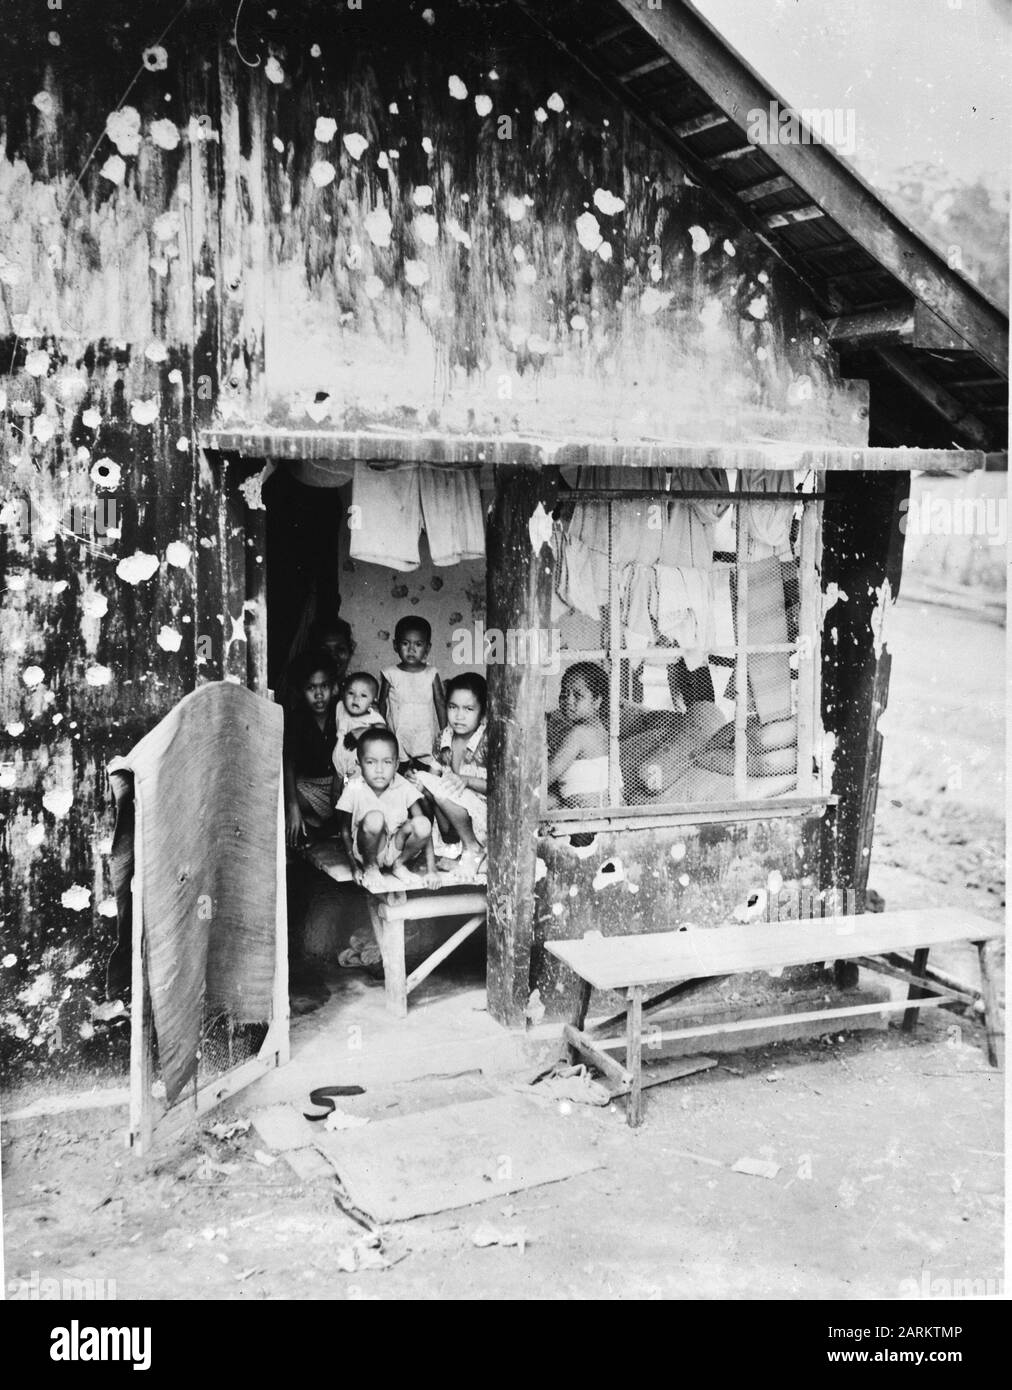 Tarakan. (Borneo, Dutch East Indies). [A family in a bullet-ridden barak/hut] Date: 1945 Location: Indonesia, Dutch East Indies Keywords: Second World War, destruction Stock Photo